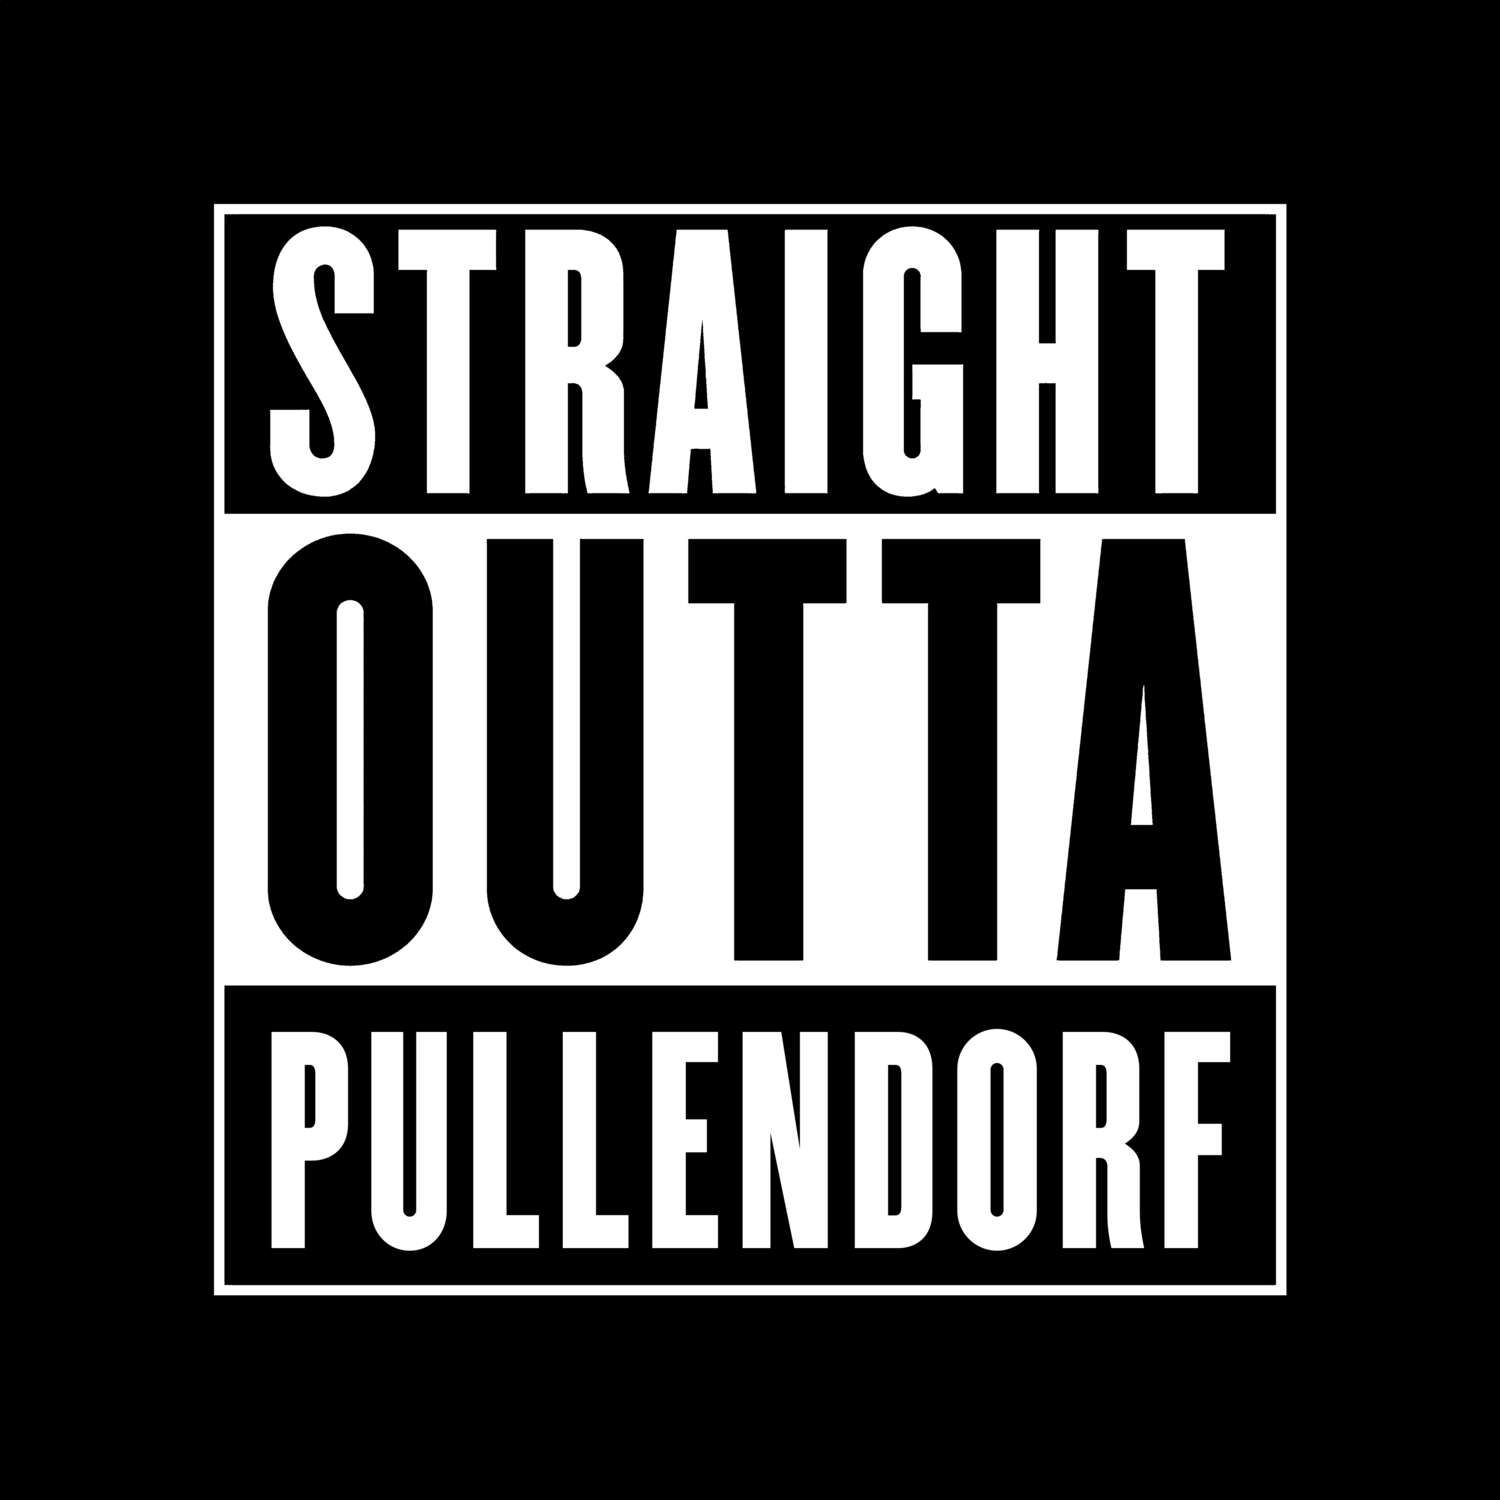 Pullendorf T-Shirt »Straight Outta«